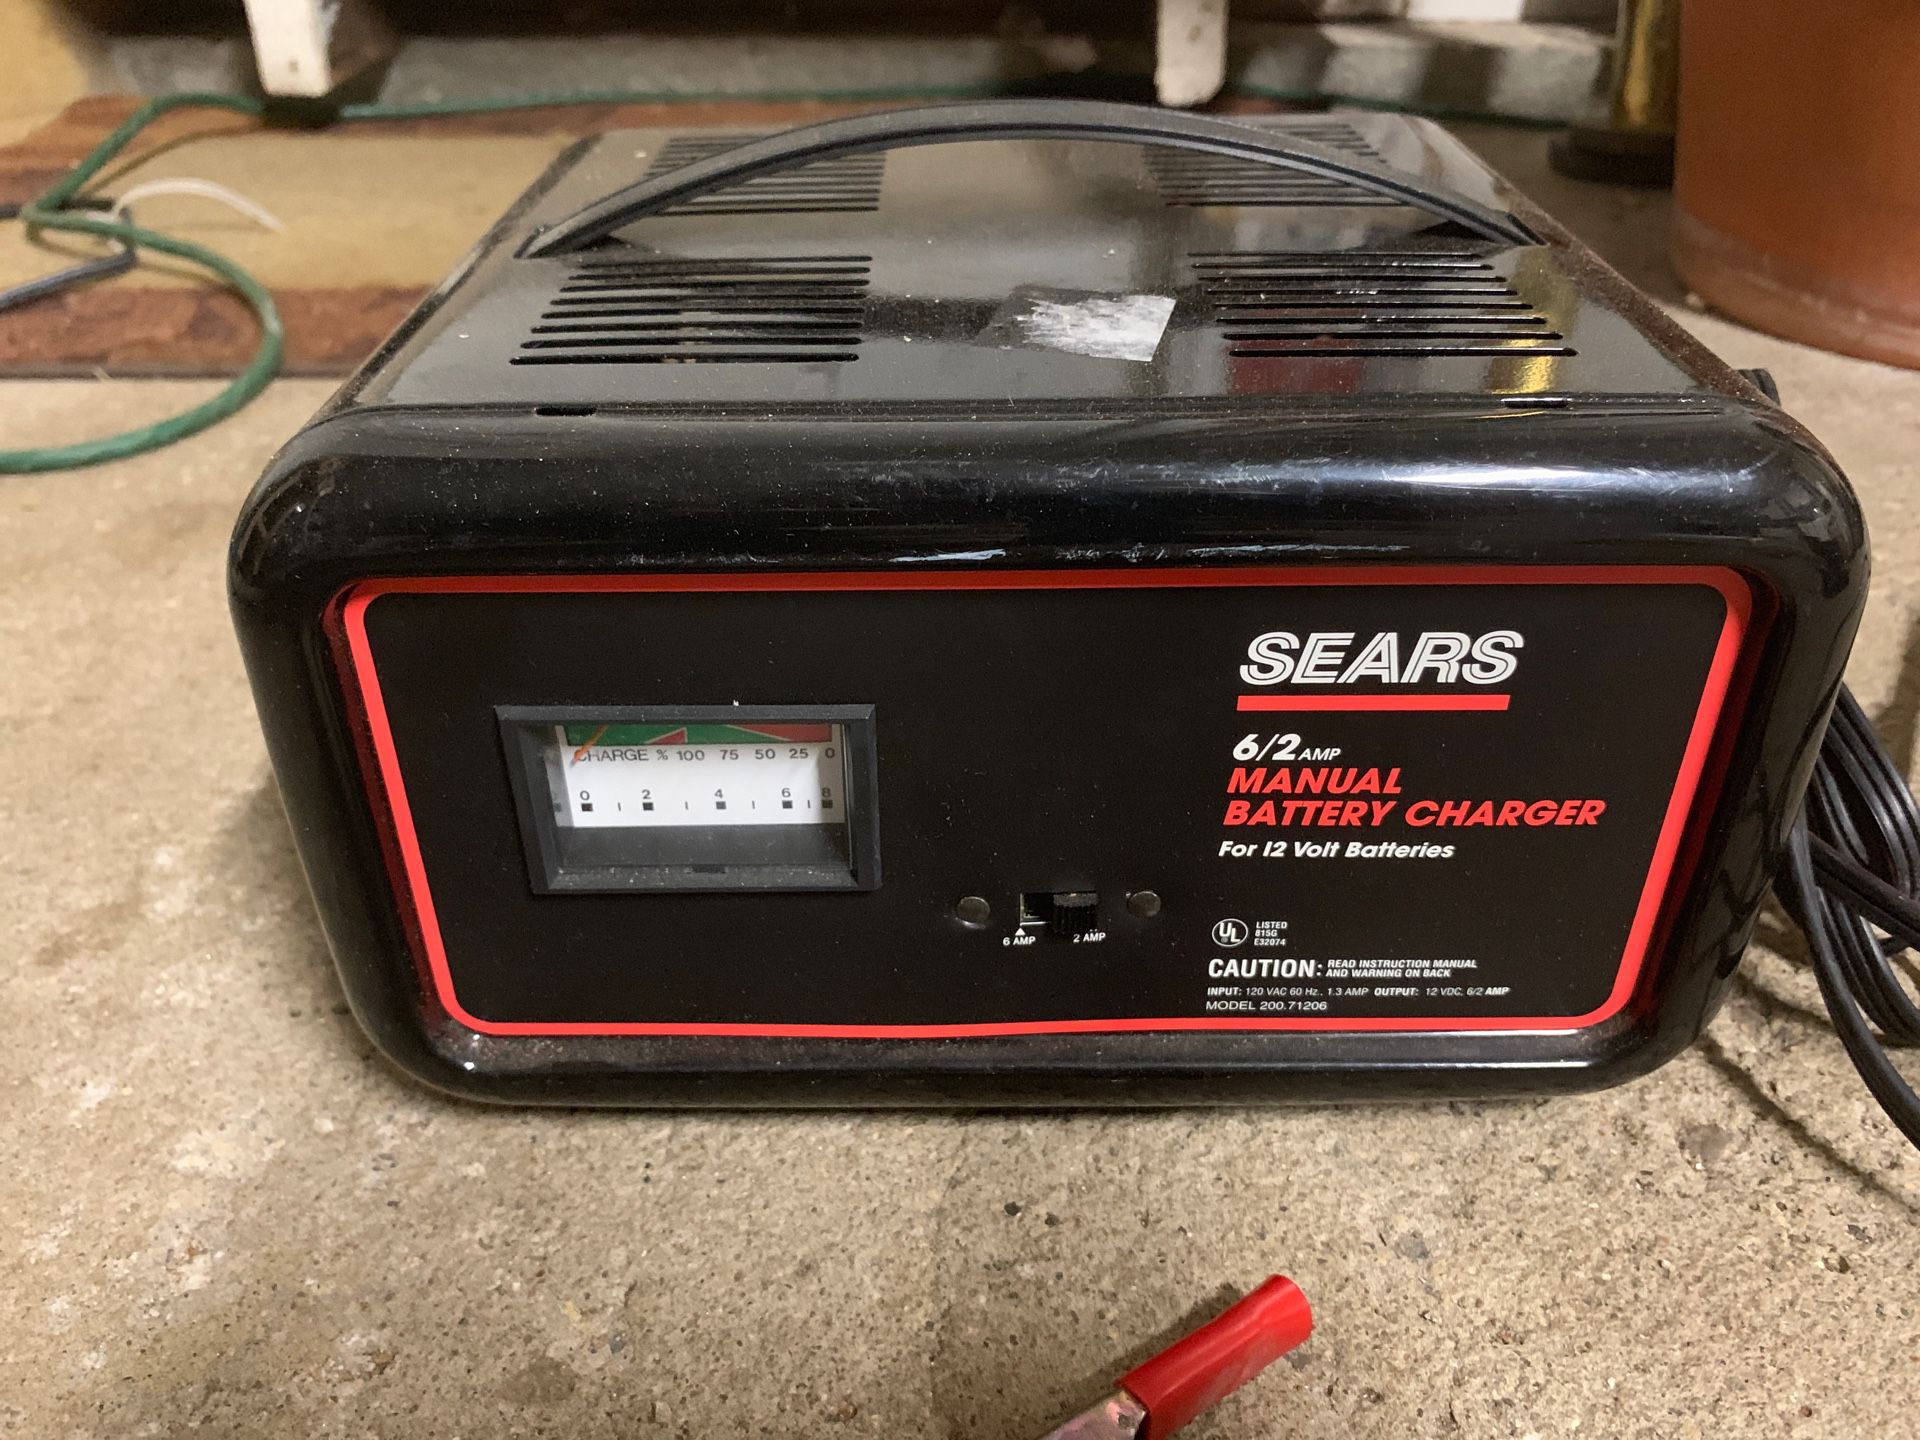 Sears car battery manual charger 2-6amp 12v electrolysis